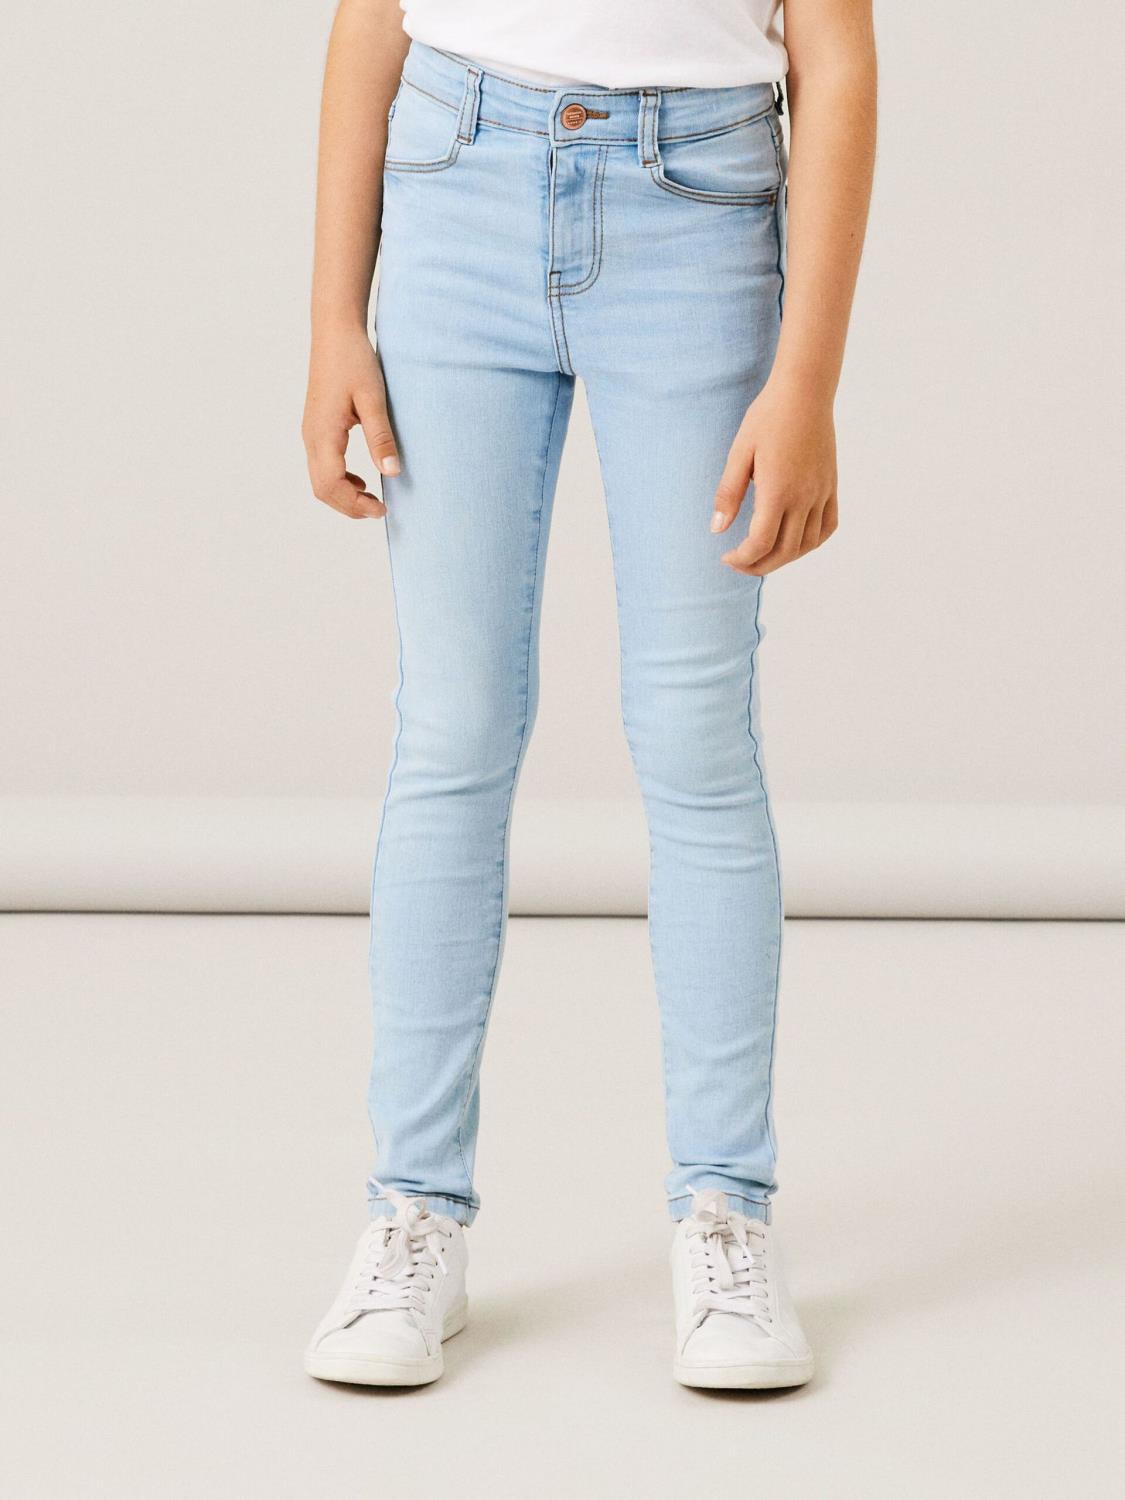 Polly HW Skinny Jeans - Medium Blue Denim